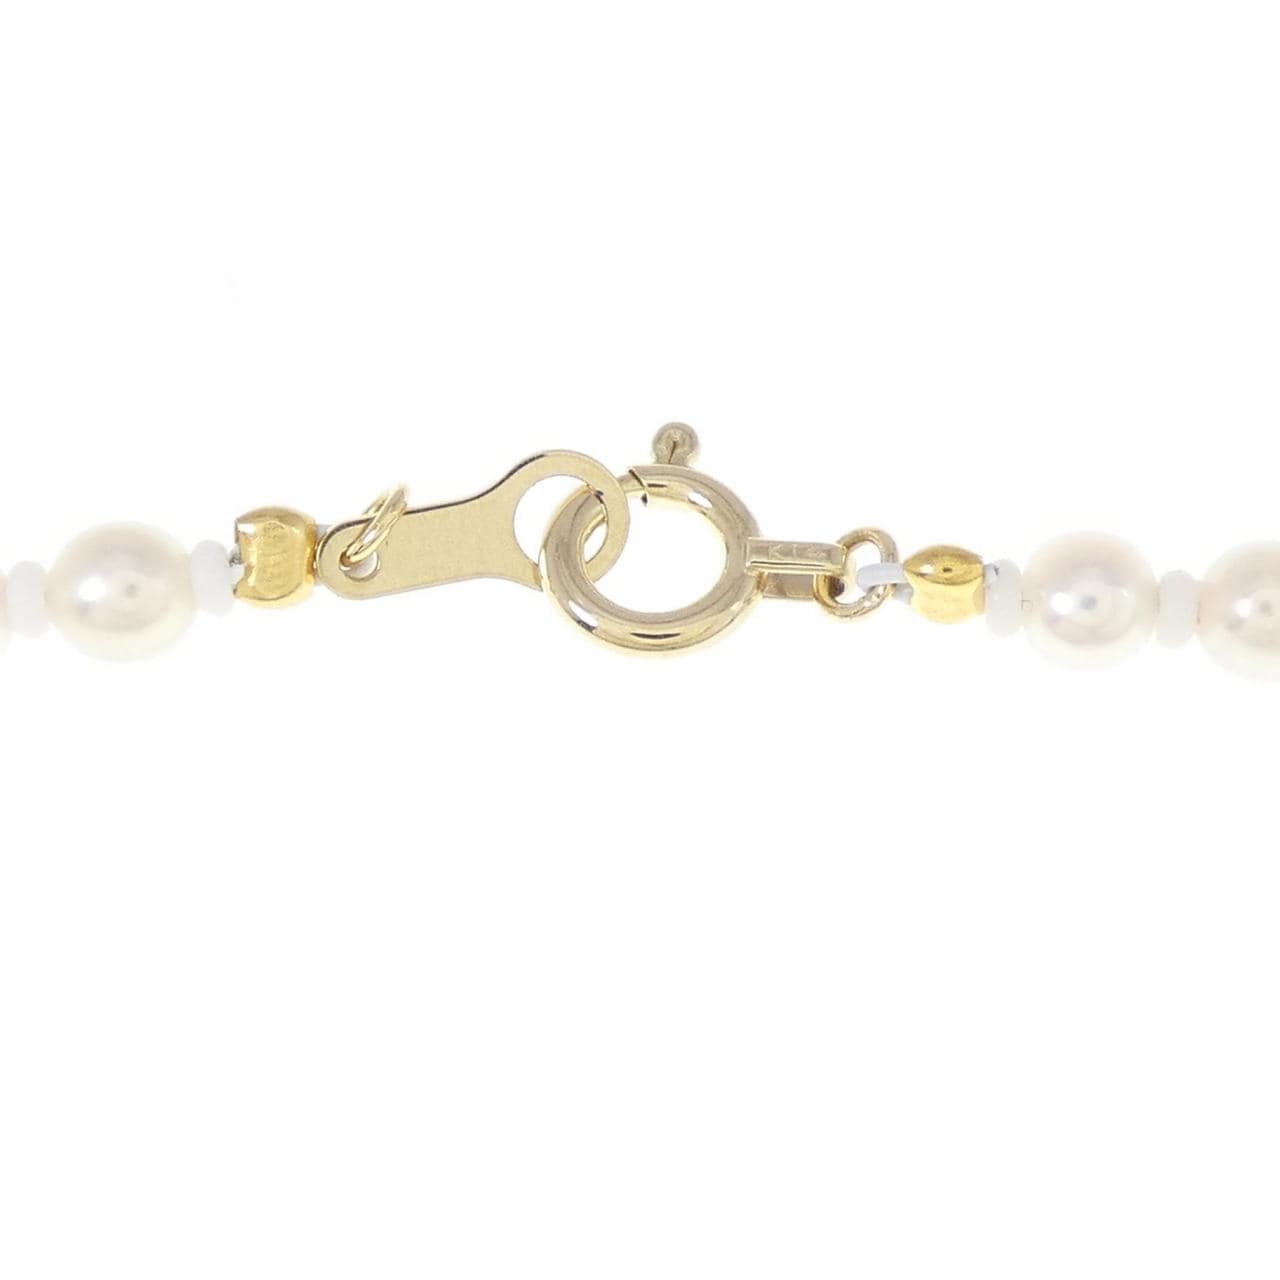 K14YG Akoya pearl necklace 3-3.5mm